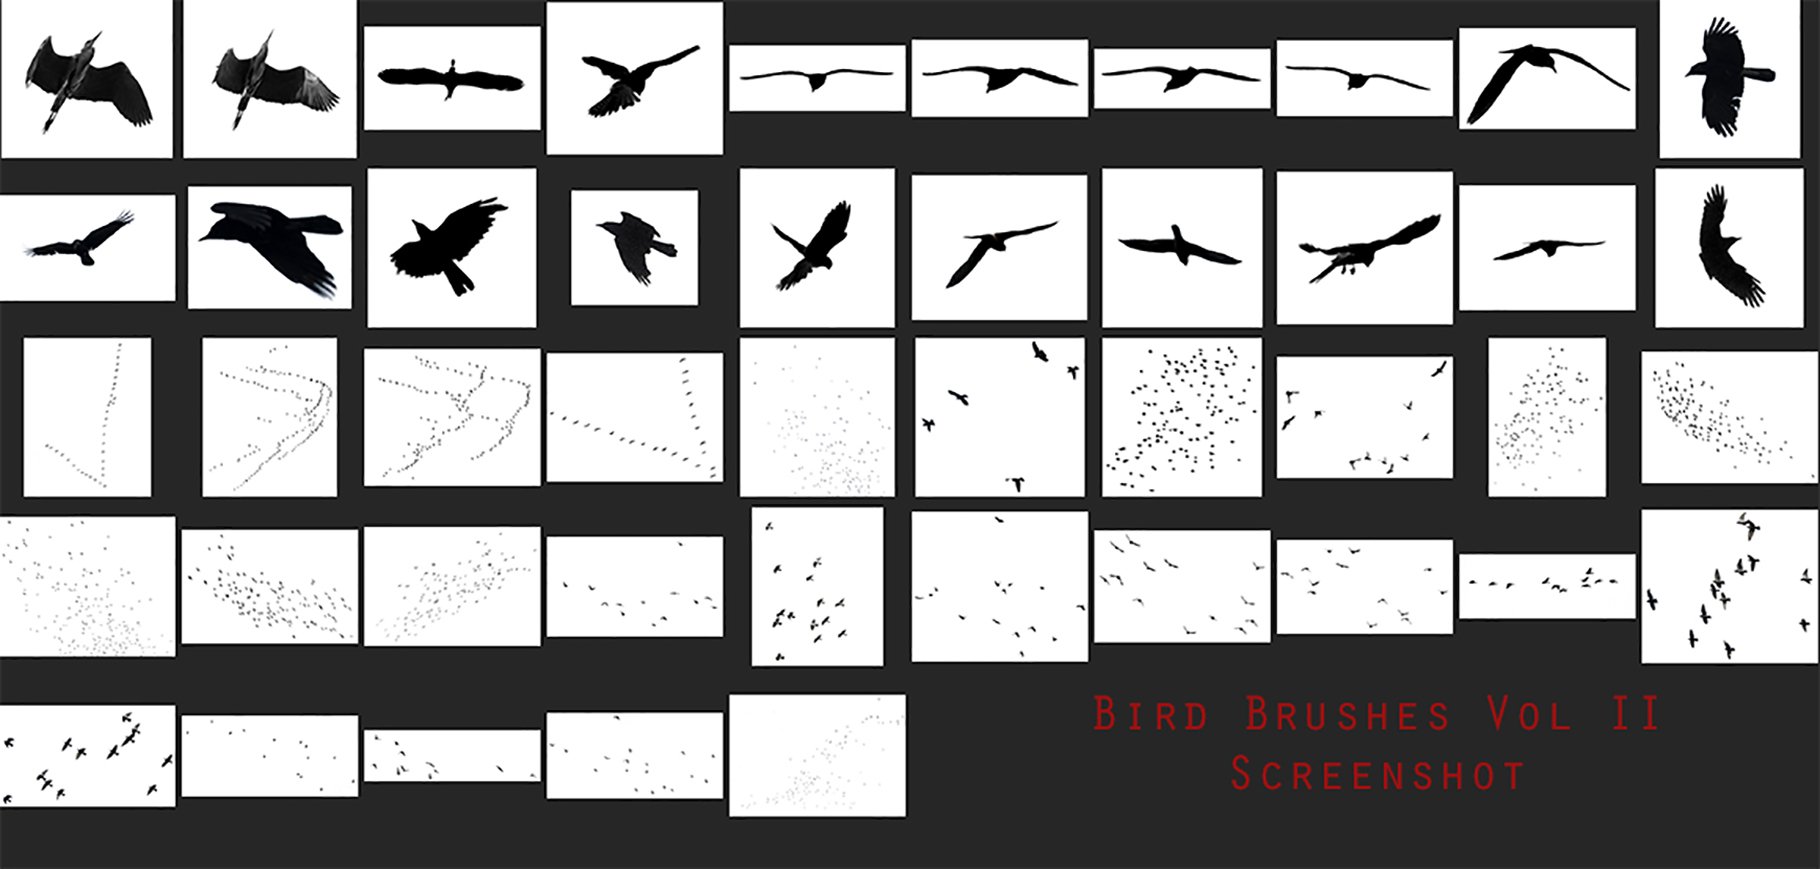 Bird Brushes Vol IIpreview image.